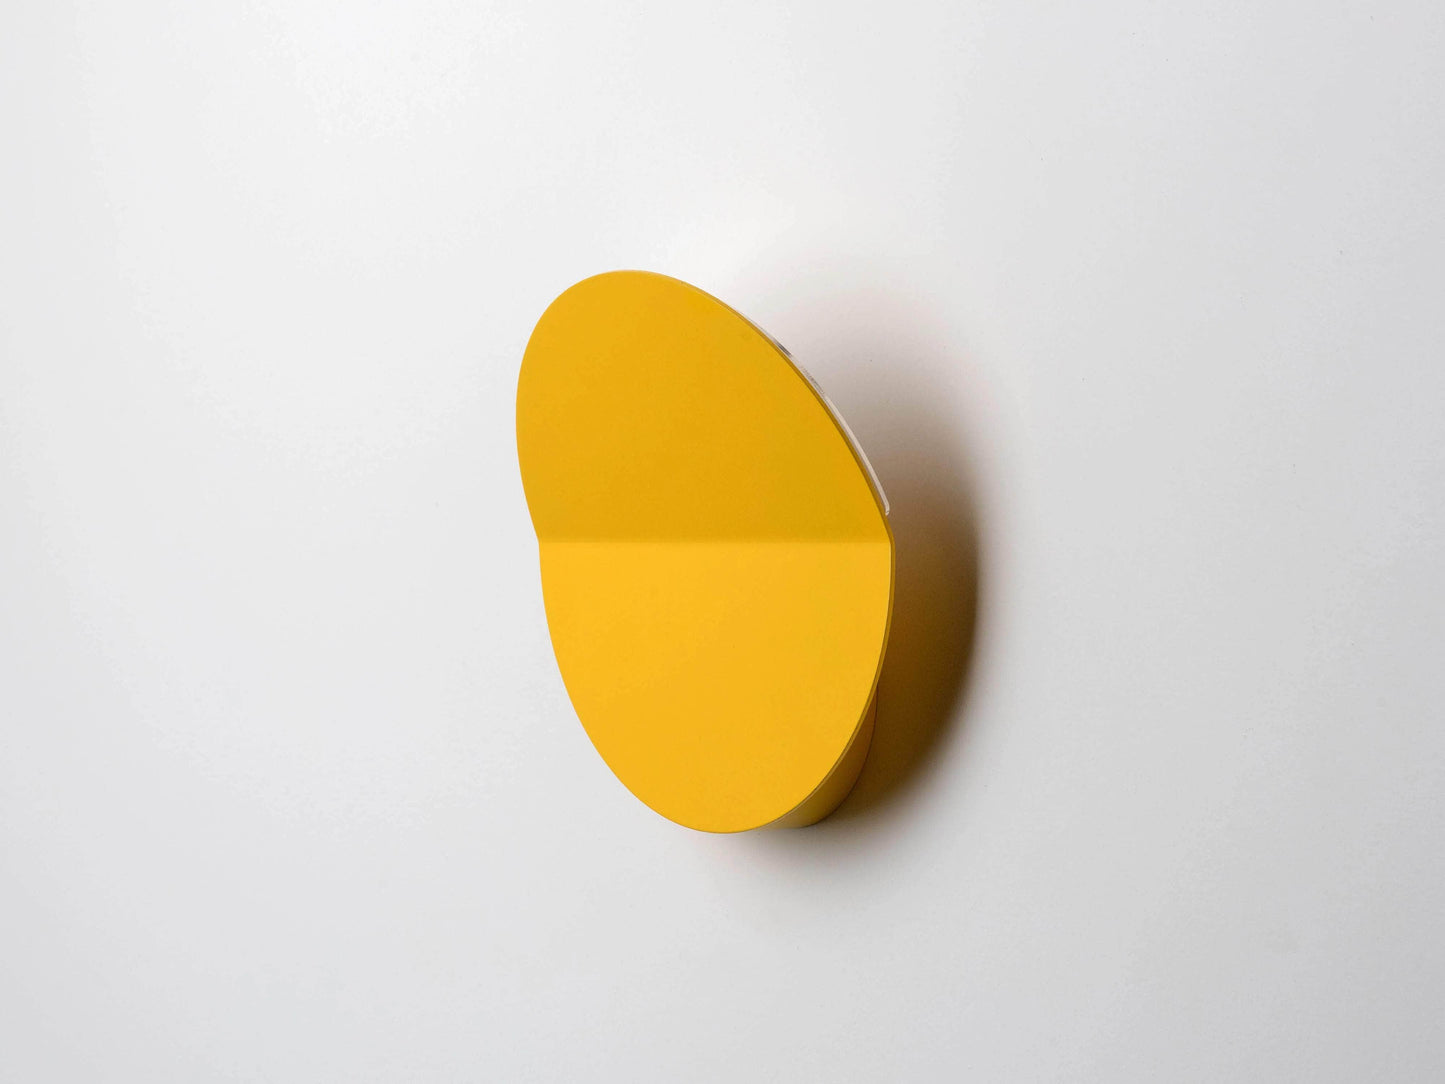 Yolk yellow diffuser wall light